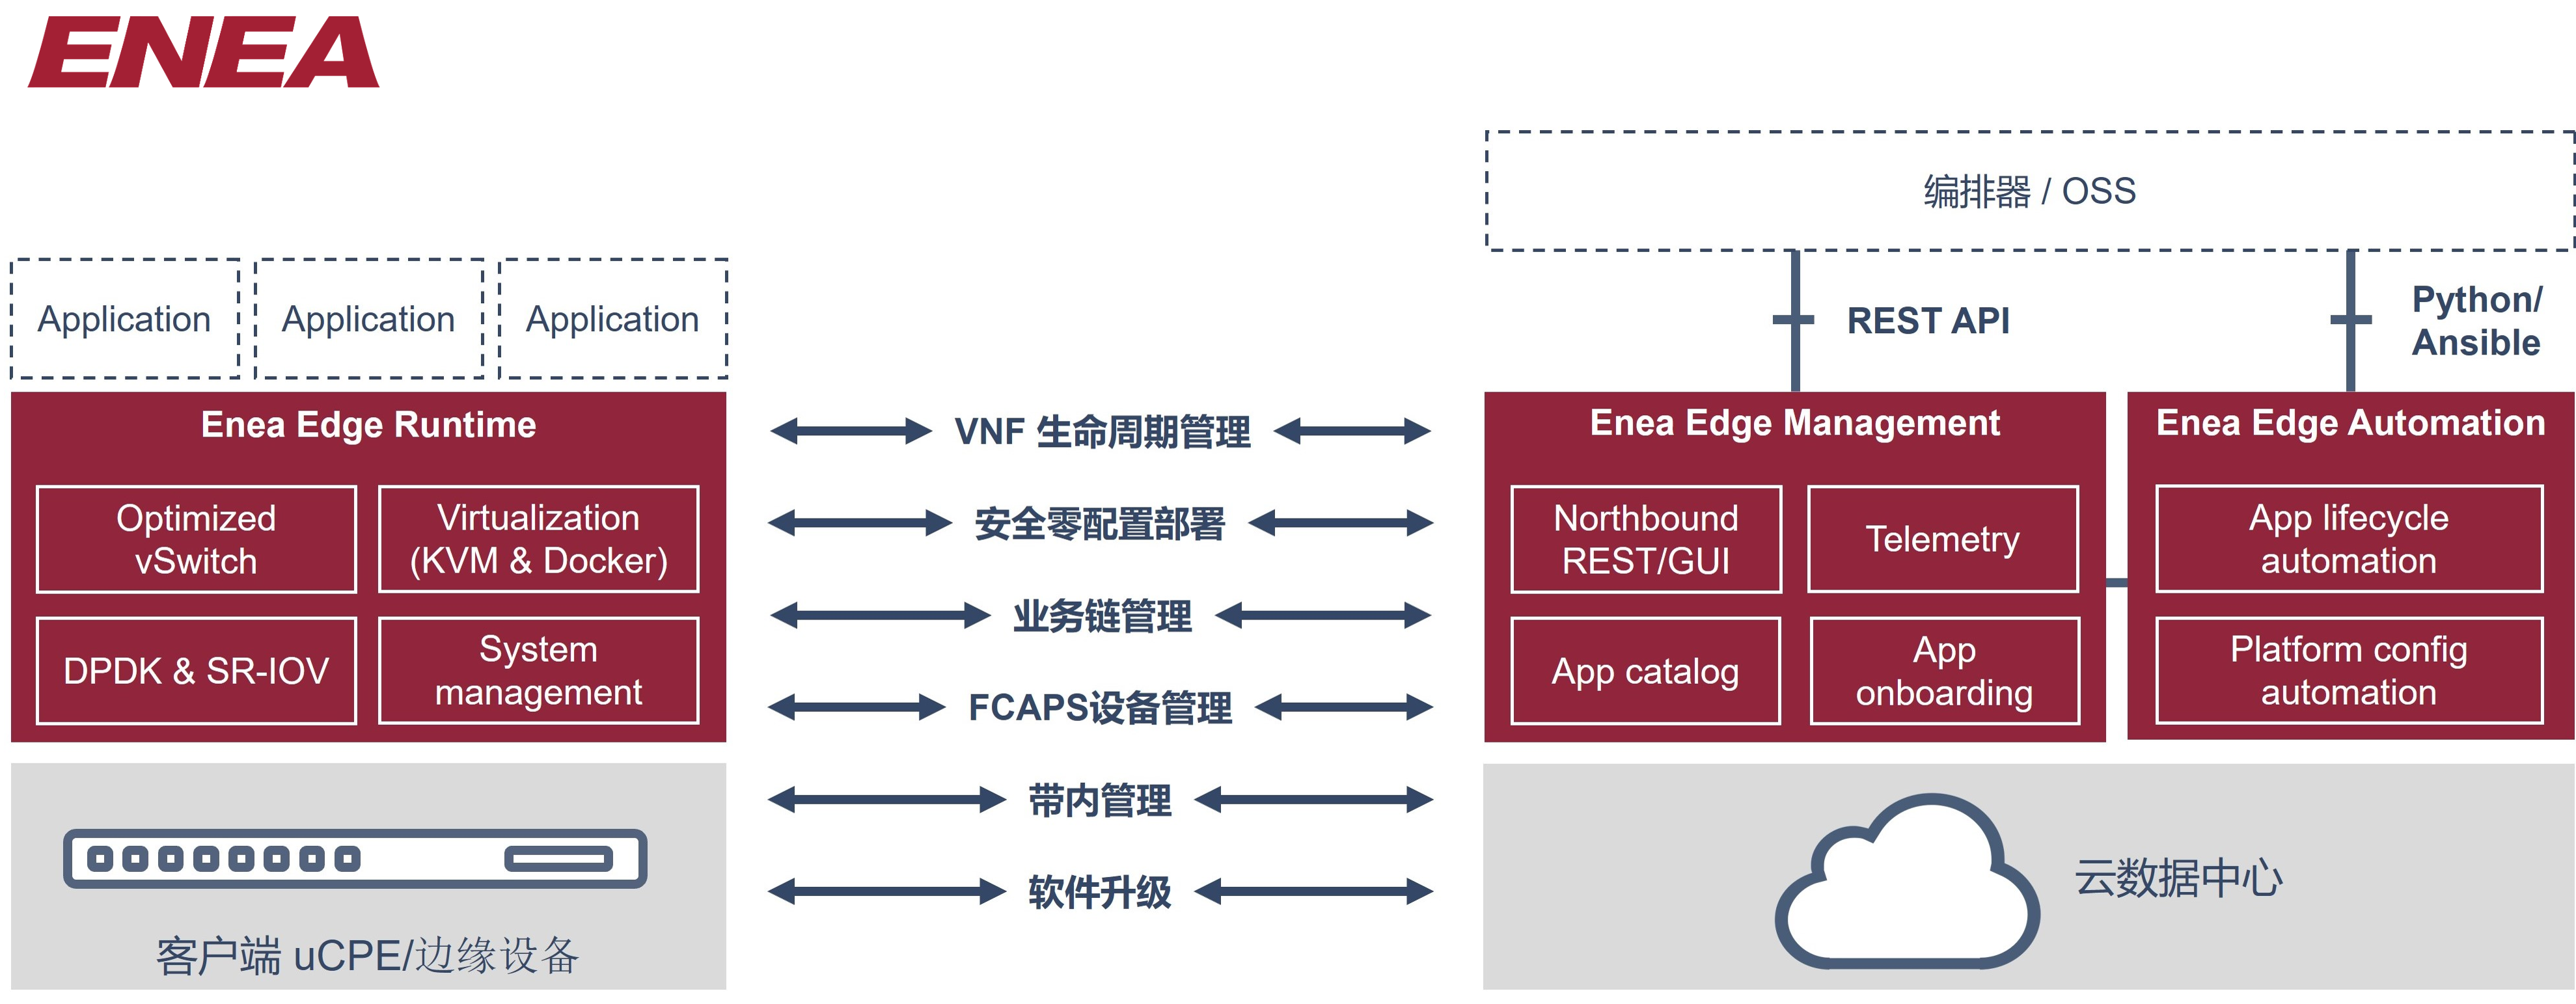 Netology MSP使用Enea虚拟化平台简化SD-WAN业务